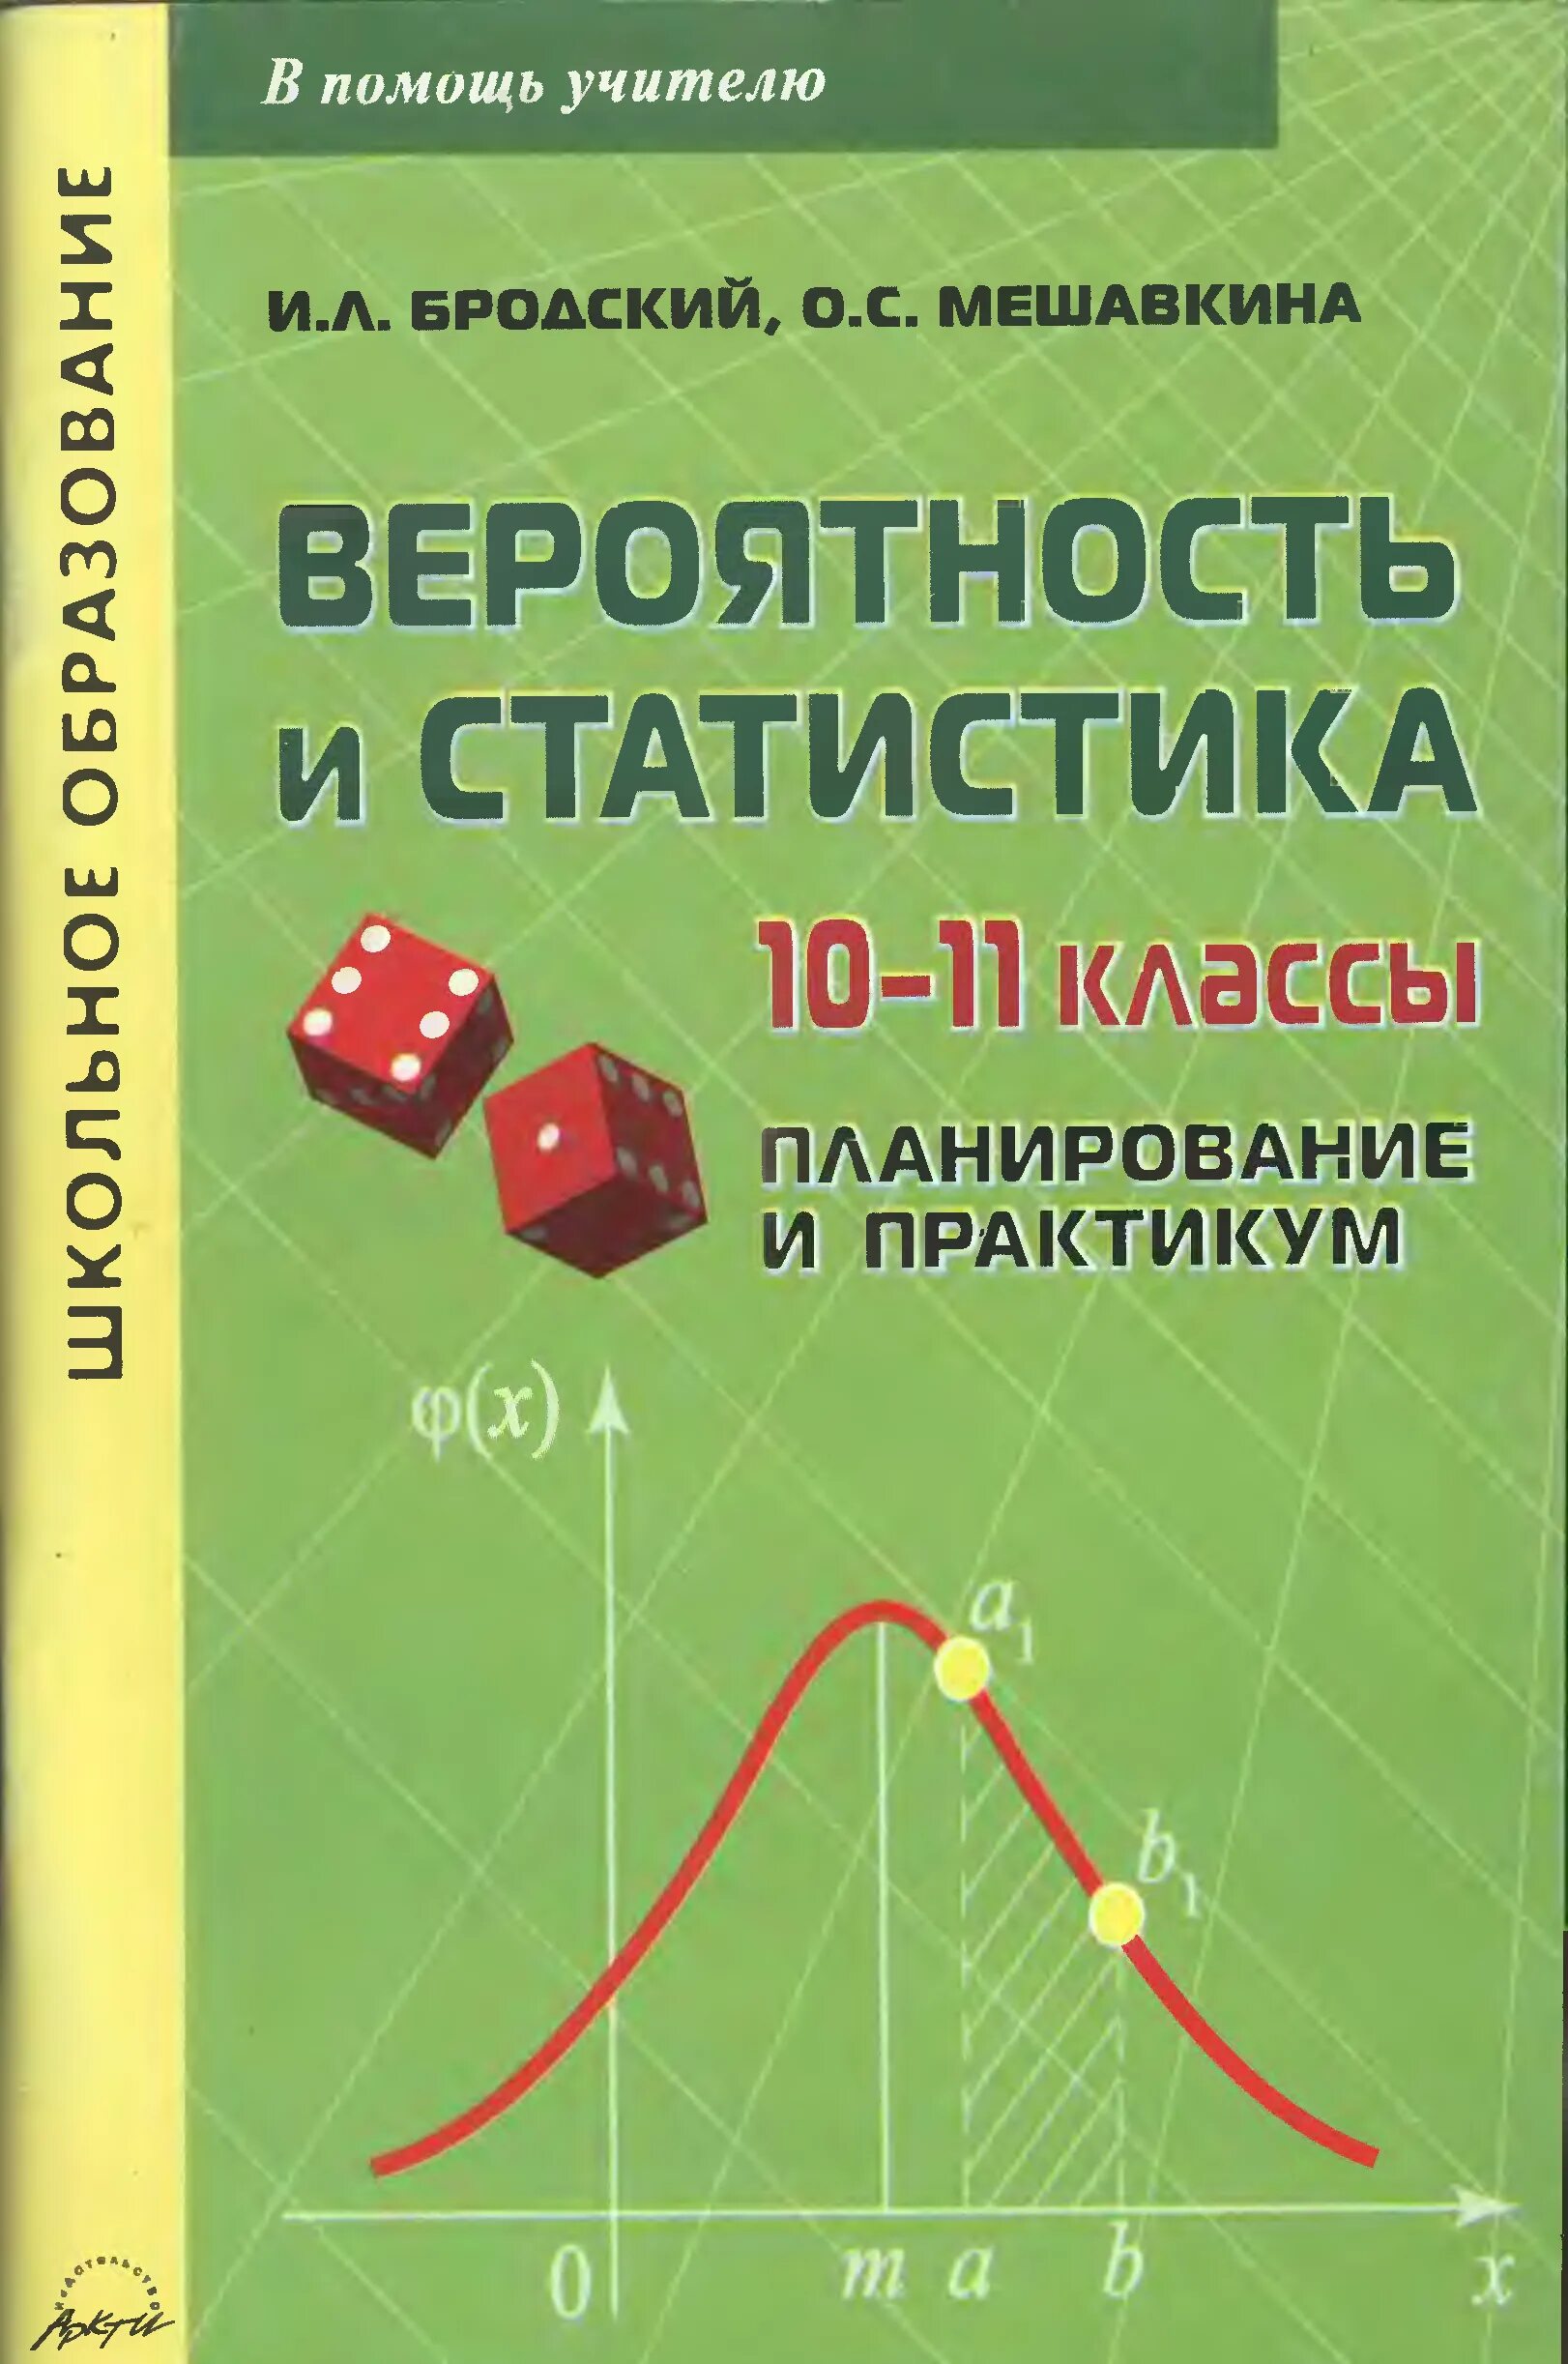 Вероятность и статистика. Теория вероятности и статистика. Теория вероятности учебник. Книги по теории вероятности.